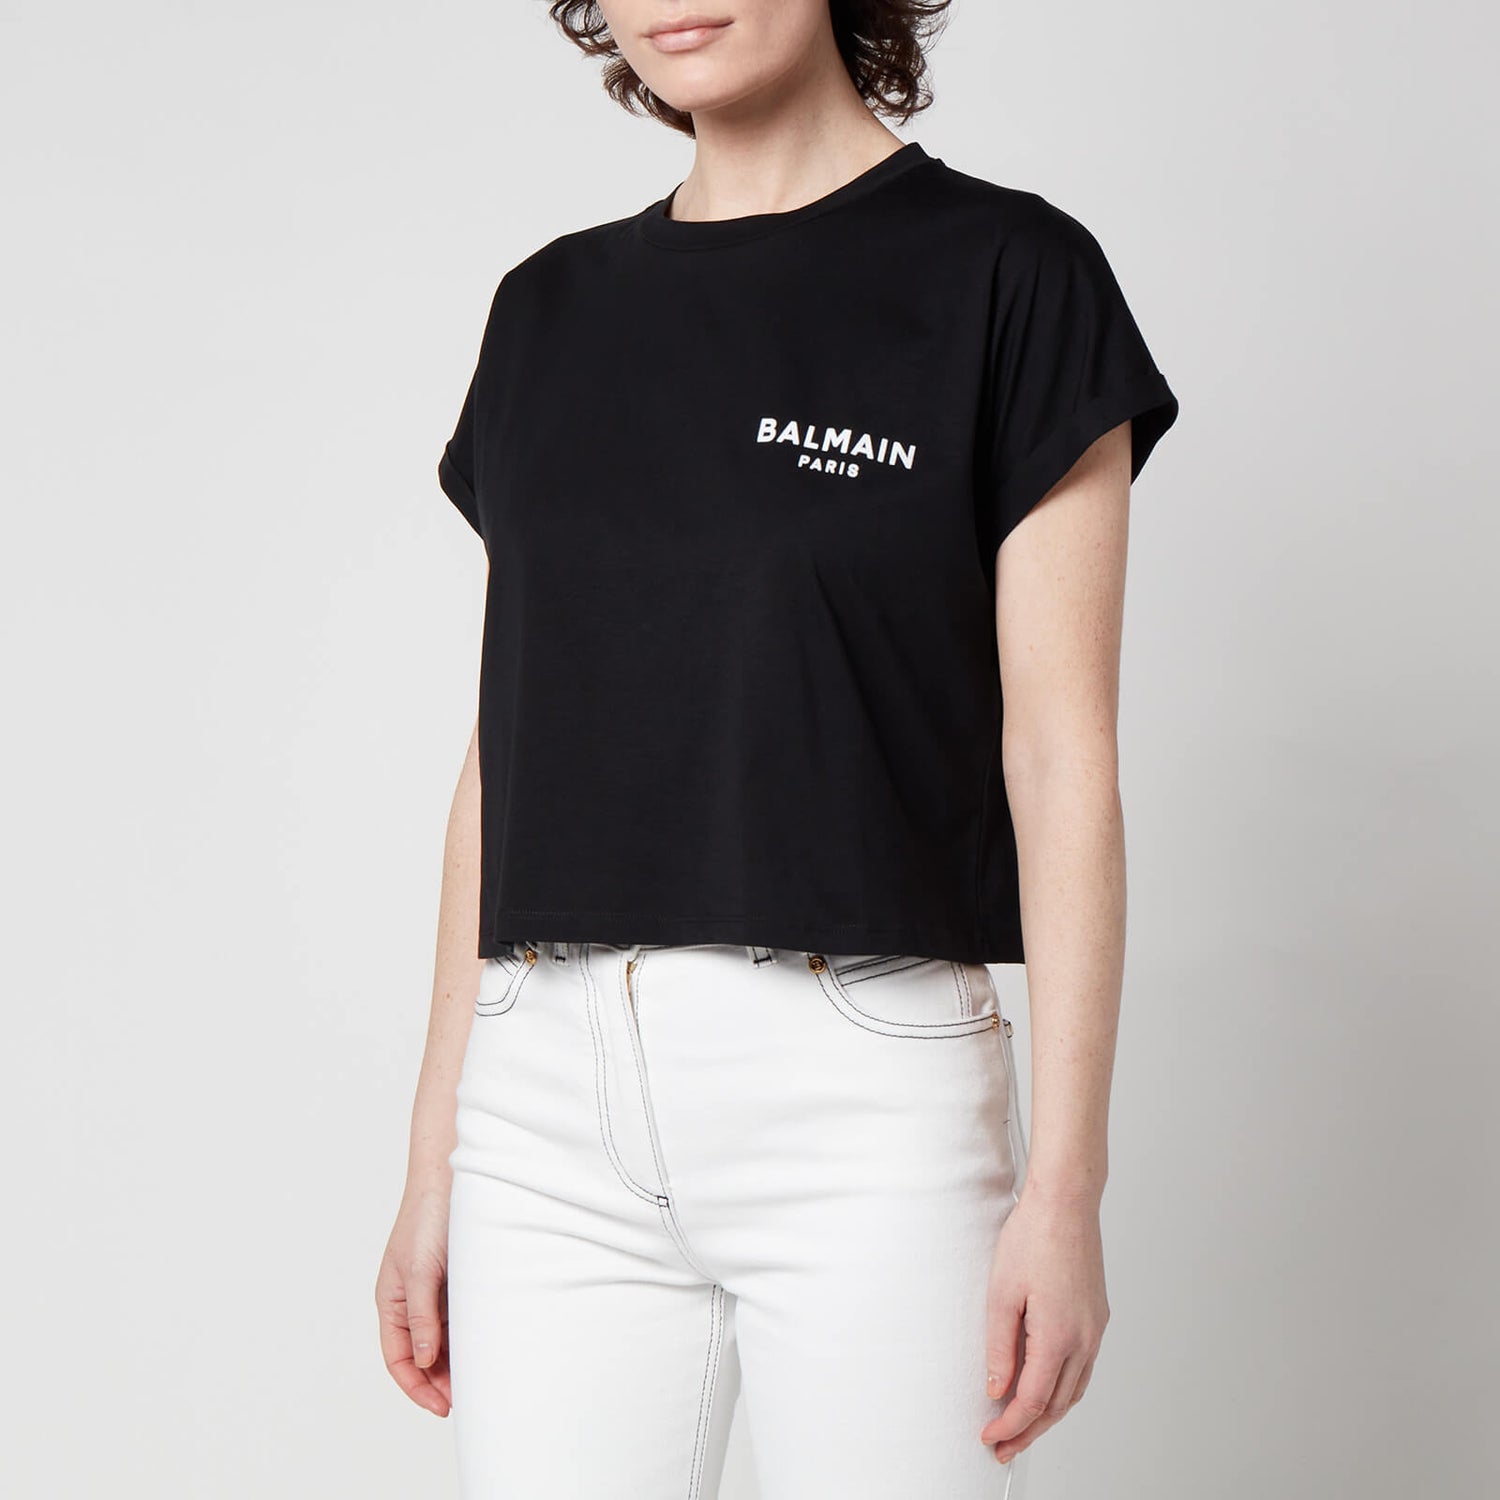 Balmain Women's Cropped Flock Detail T-Shirt - Black - XS